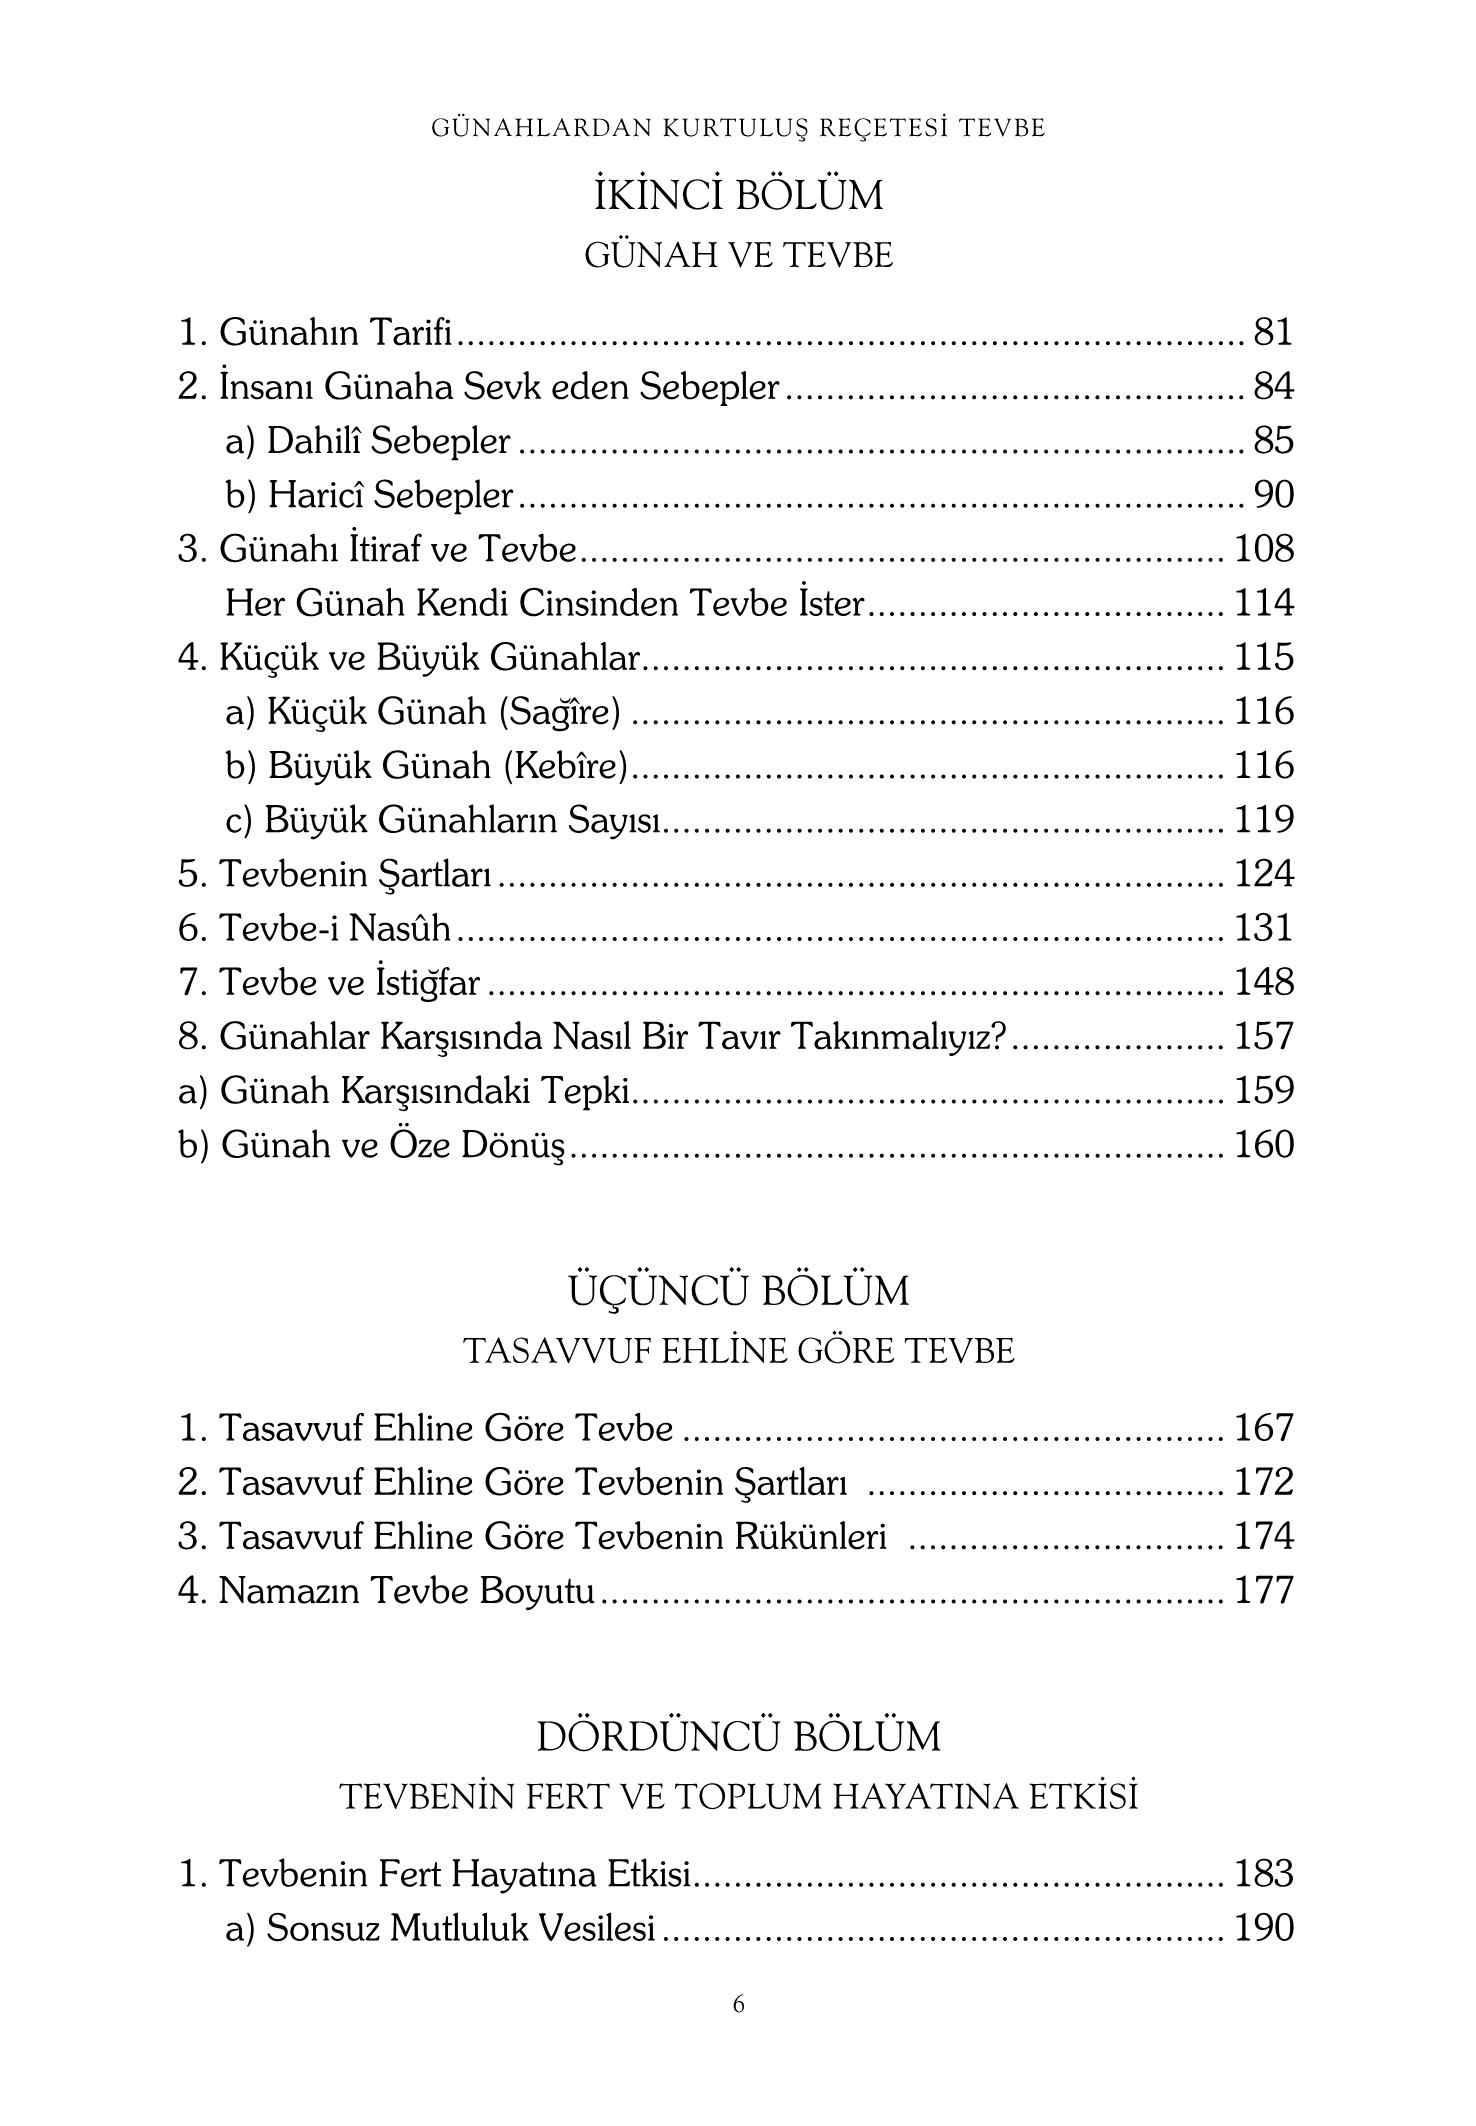 Akif Akay - Gunahlardan Kurtulus Recetesi Tevbe - RehberYayinlari.pdf, 237-Sayfa 